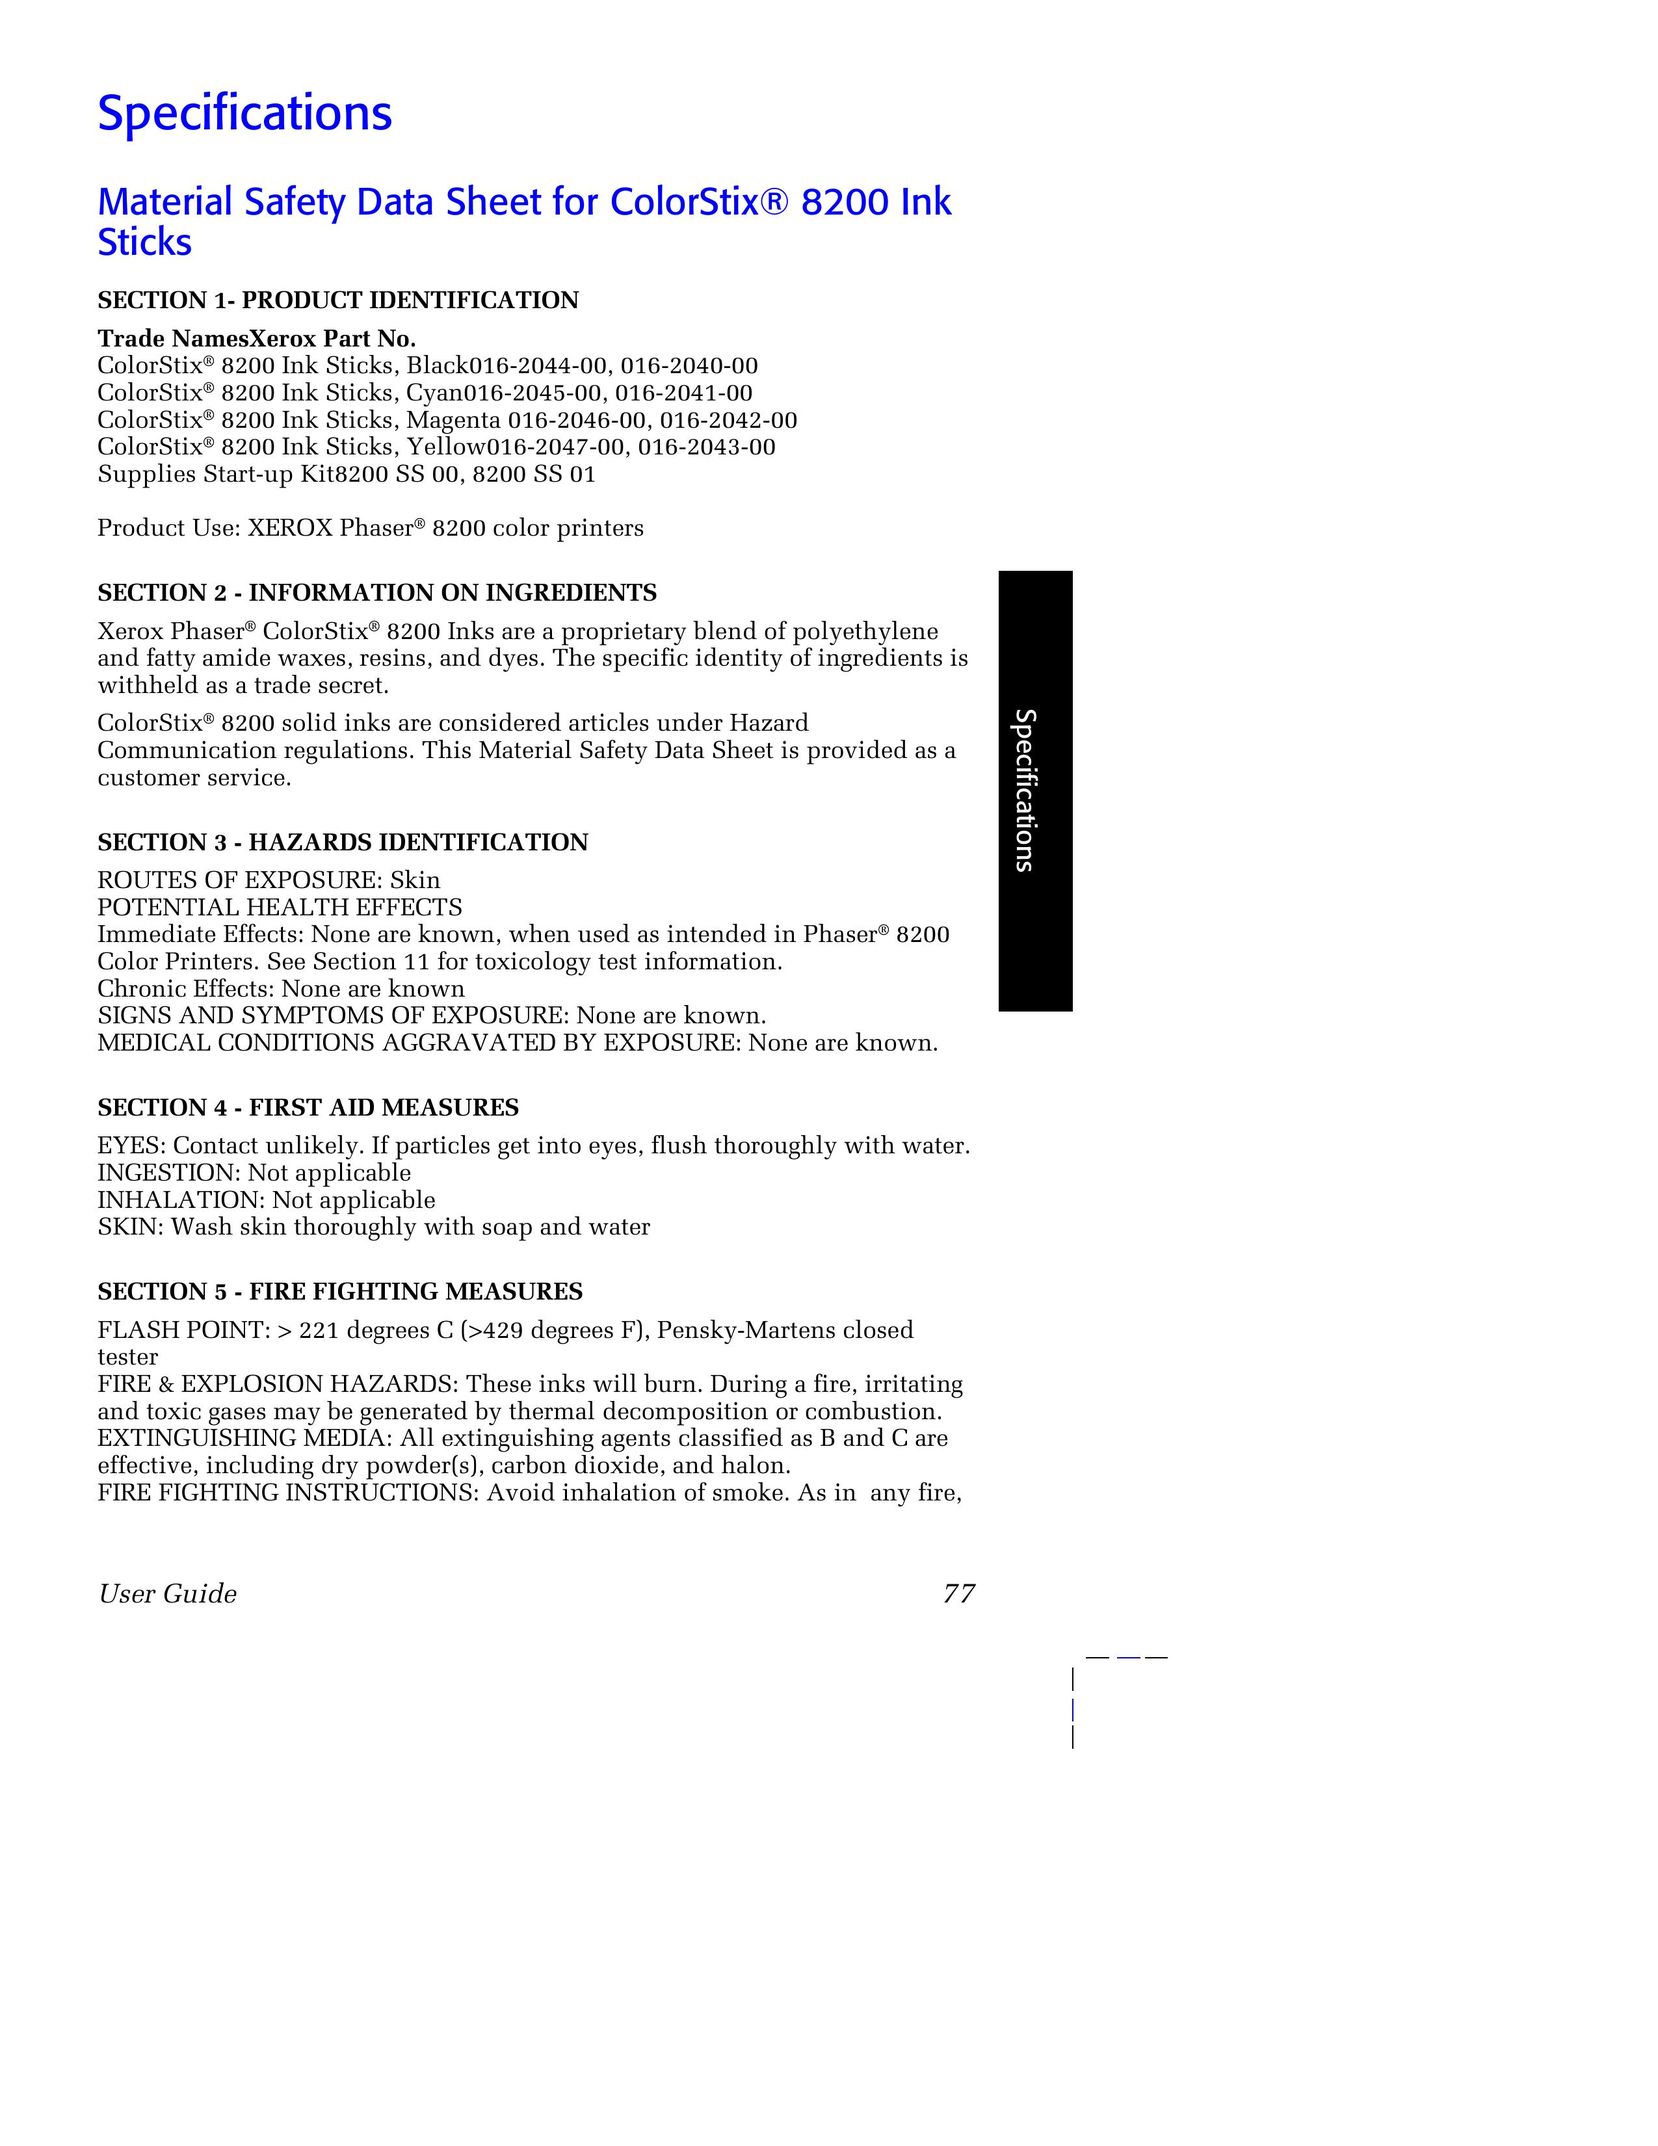 Xerox 016-2040-00 Printer Accessories User Manual